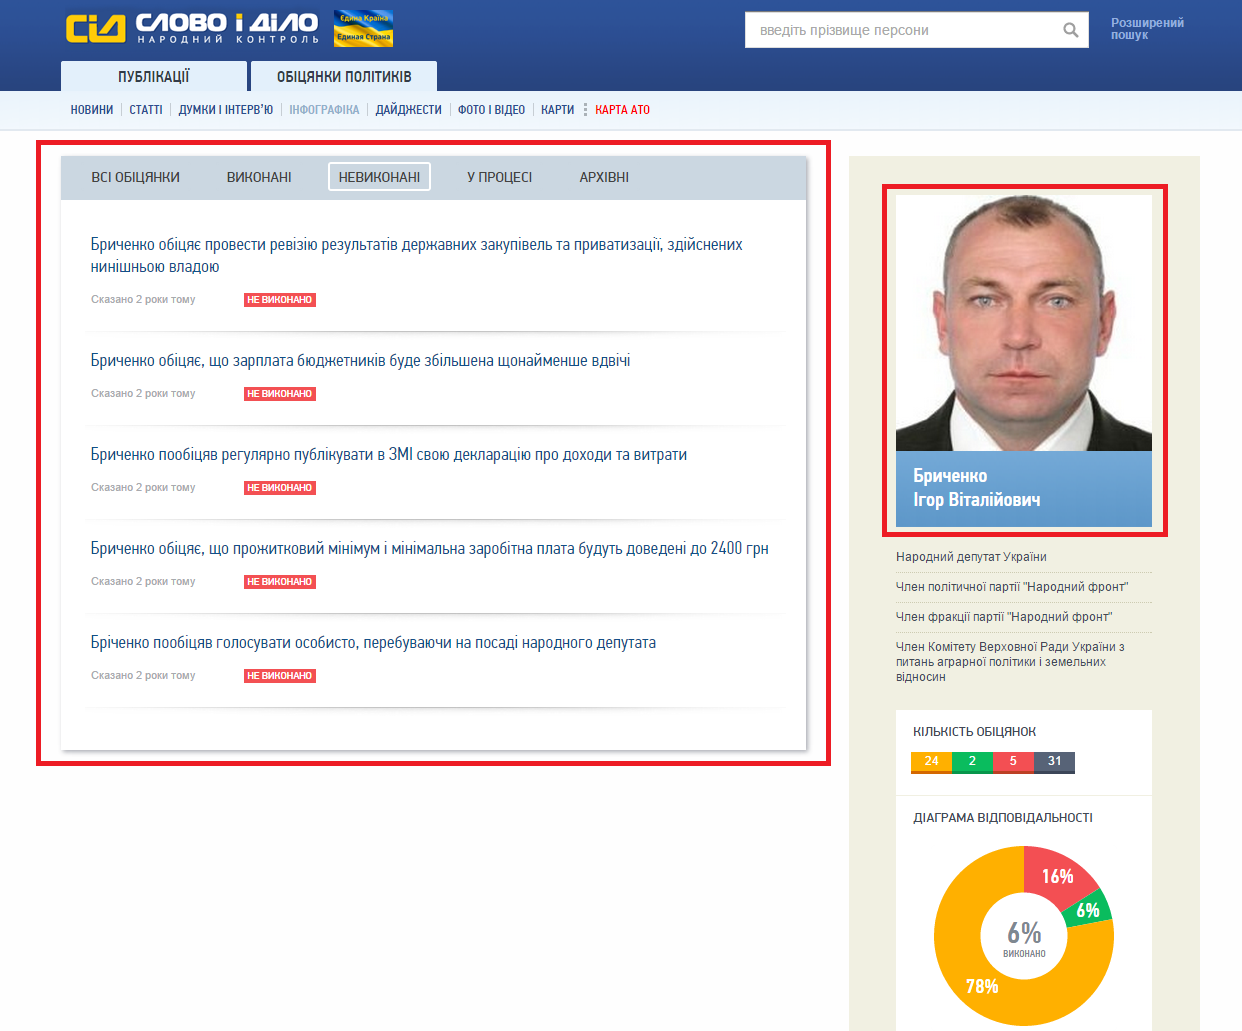 http://www.slovoidilo.ua/person/3773-Brichenko-Igor-Vitalevich/promises/failed/index.html